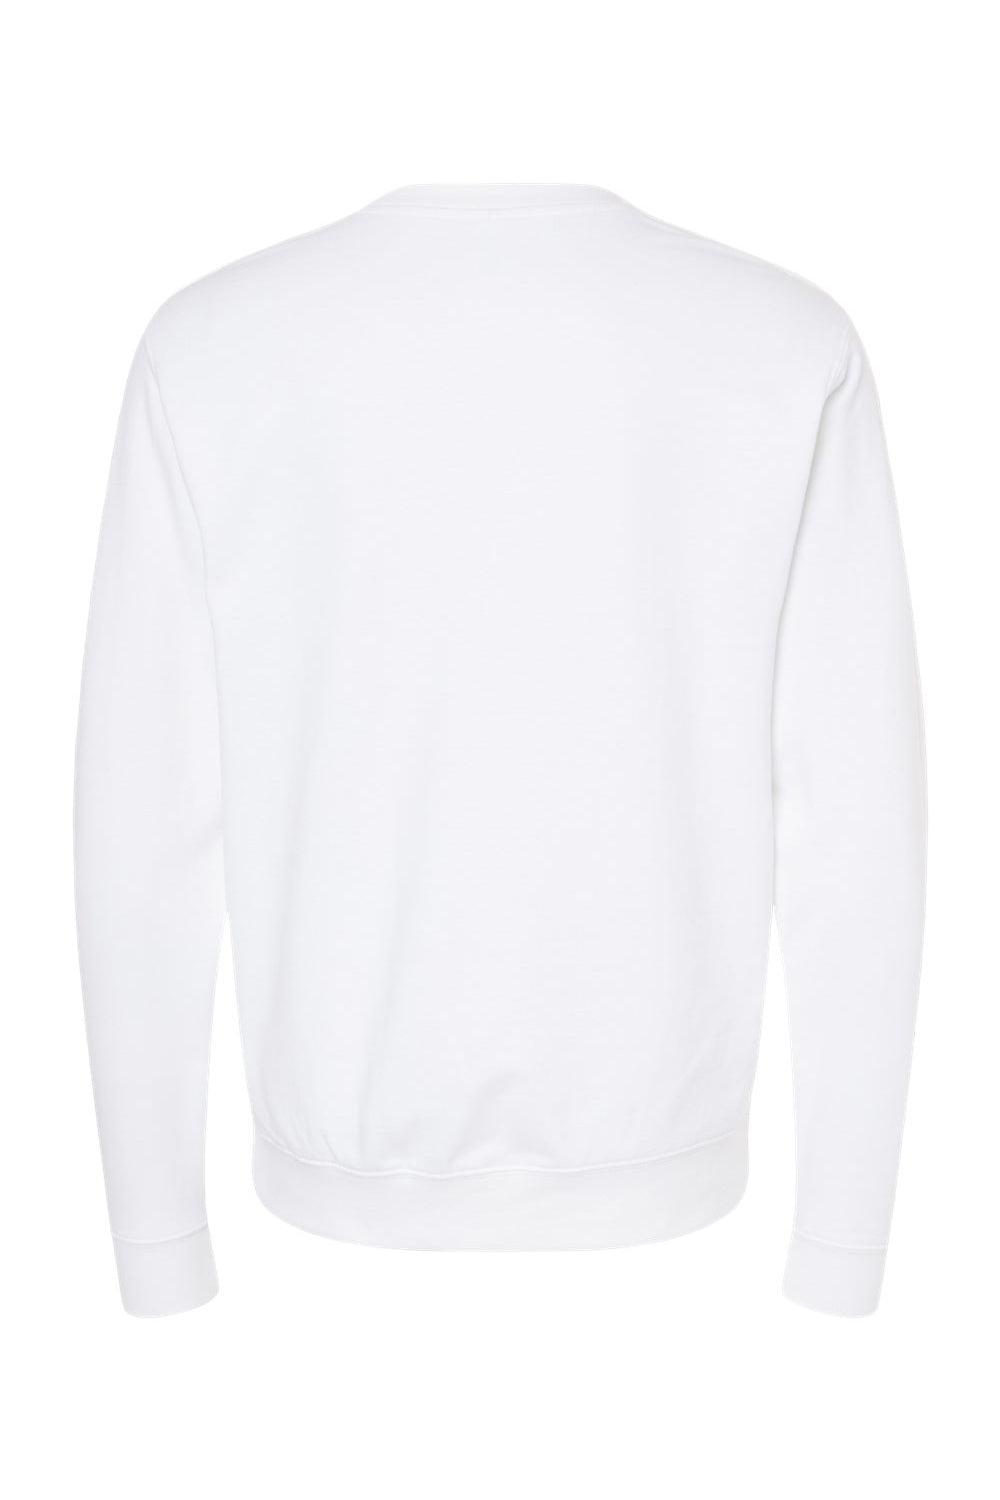 Independent Trading Co. SS3000 Mens Crewneck Sweatshirt White Flat Back